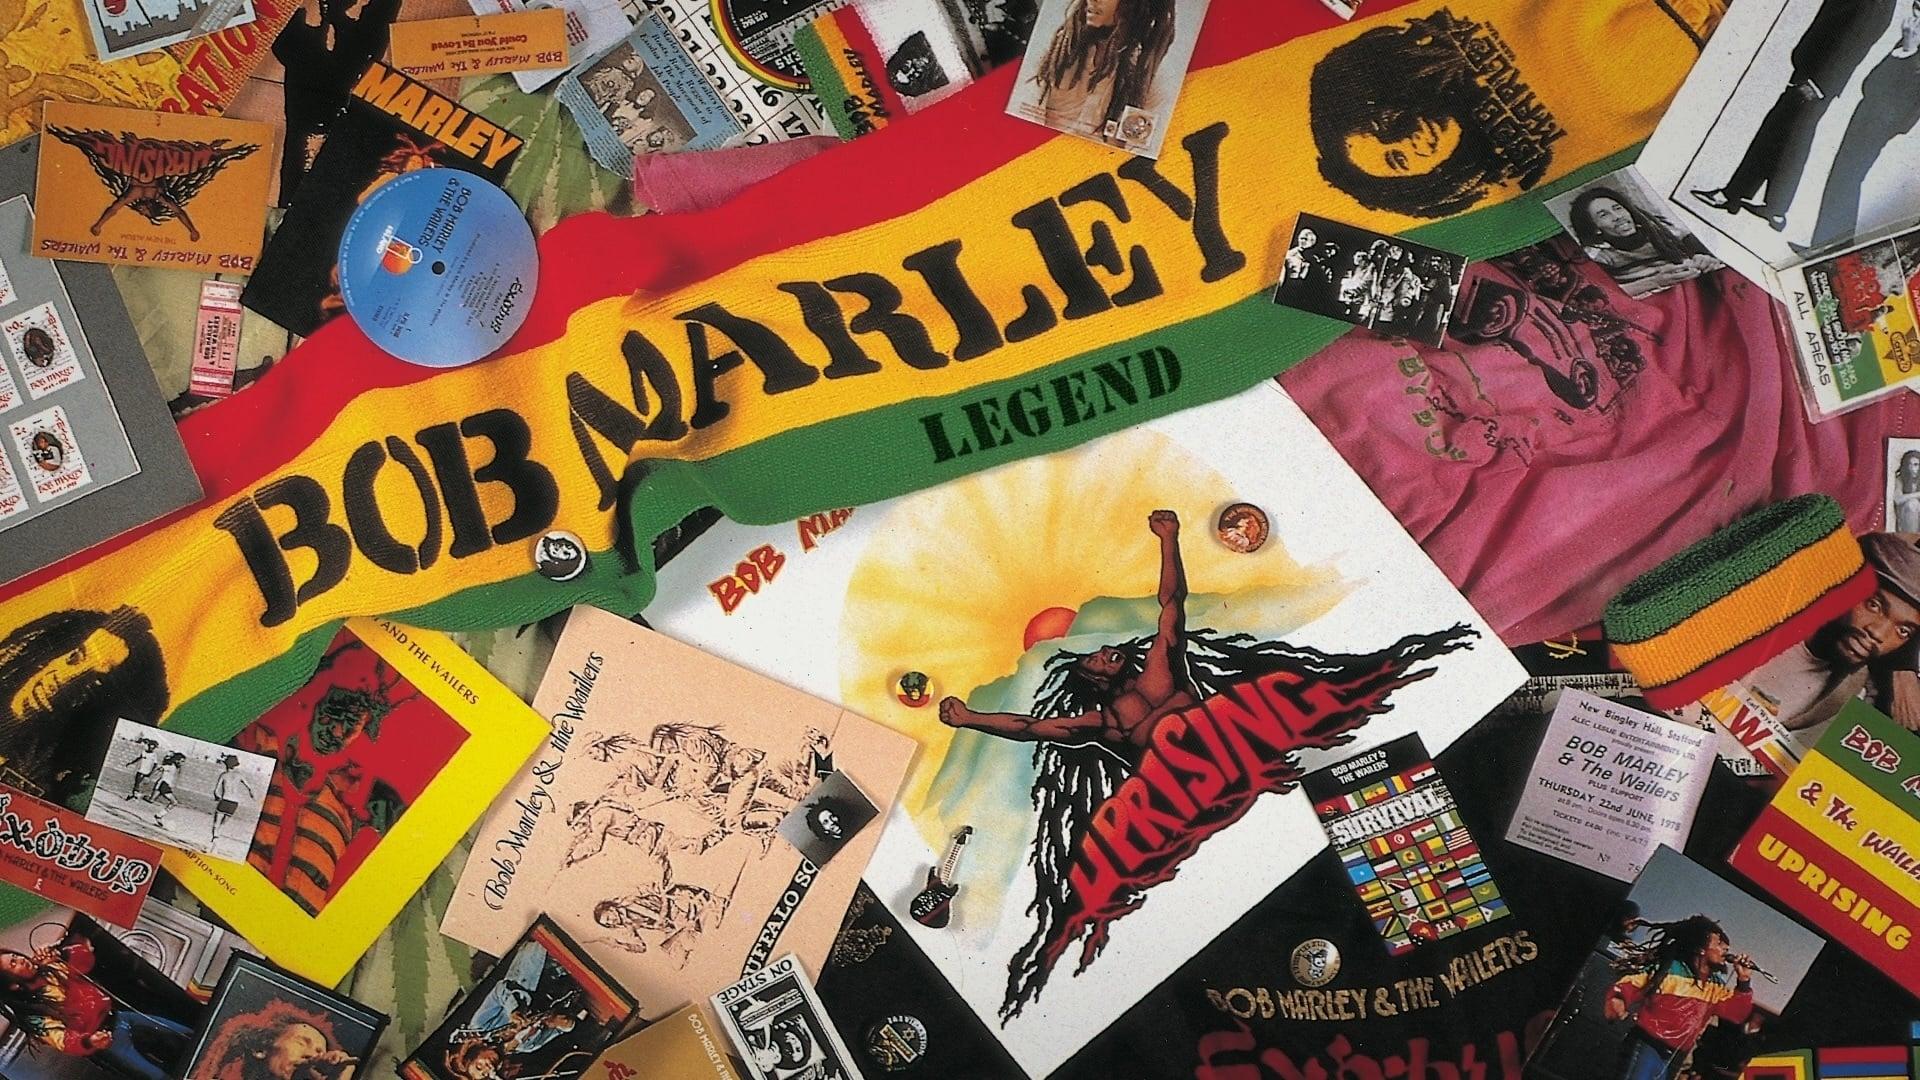 Bob Marley & The Wailers - Legend backdrop